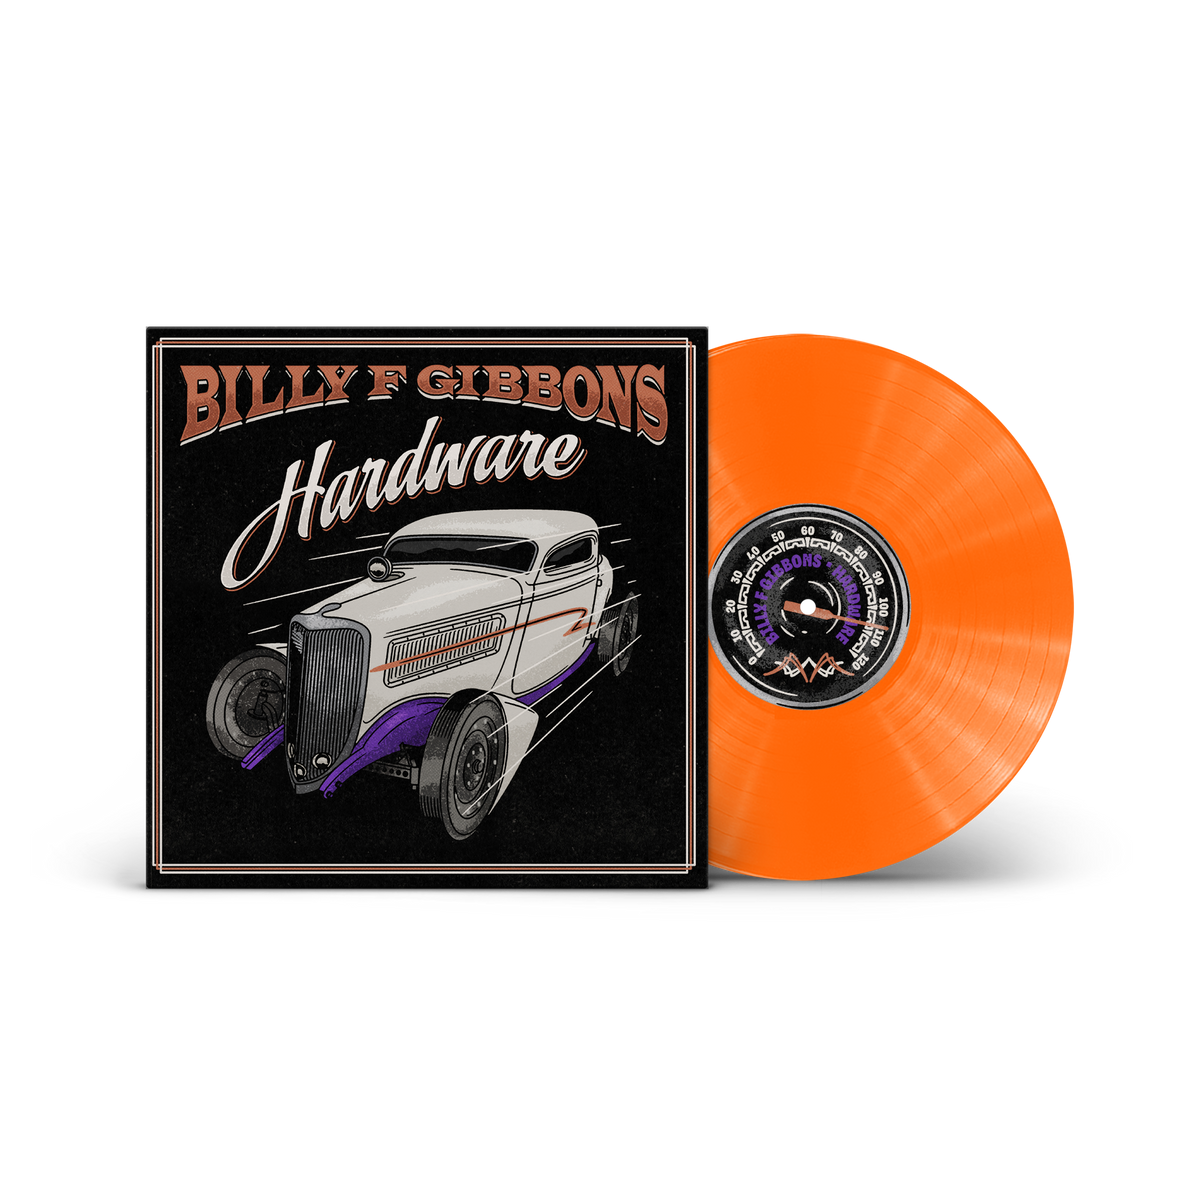 BILLY F GIBBONS 'HARDWARE' LP (Orange Crush Vinyl)